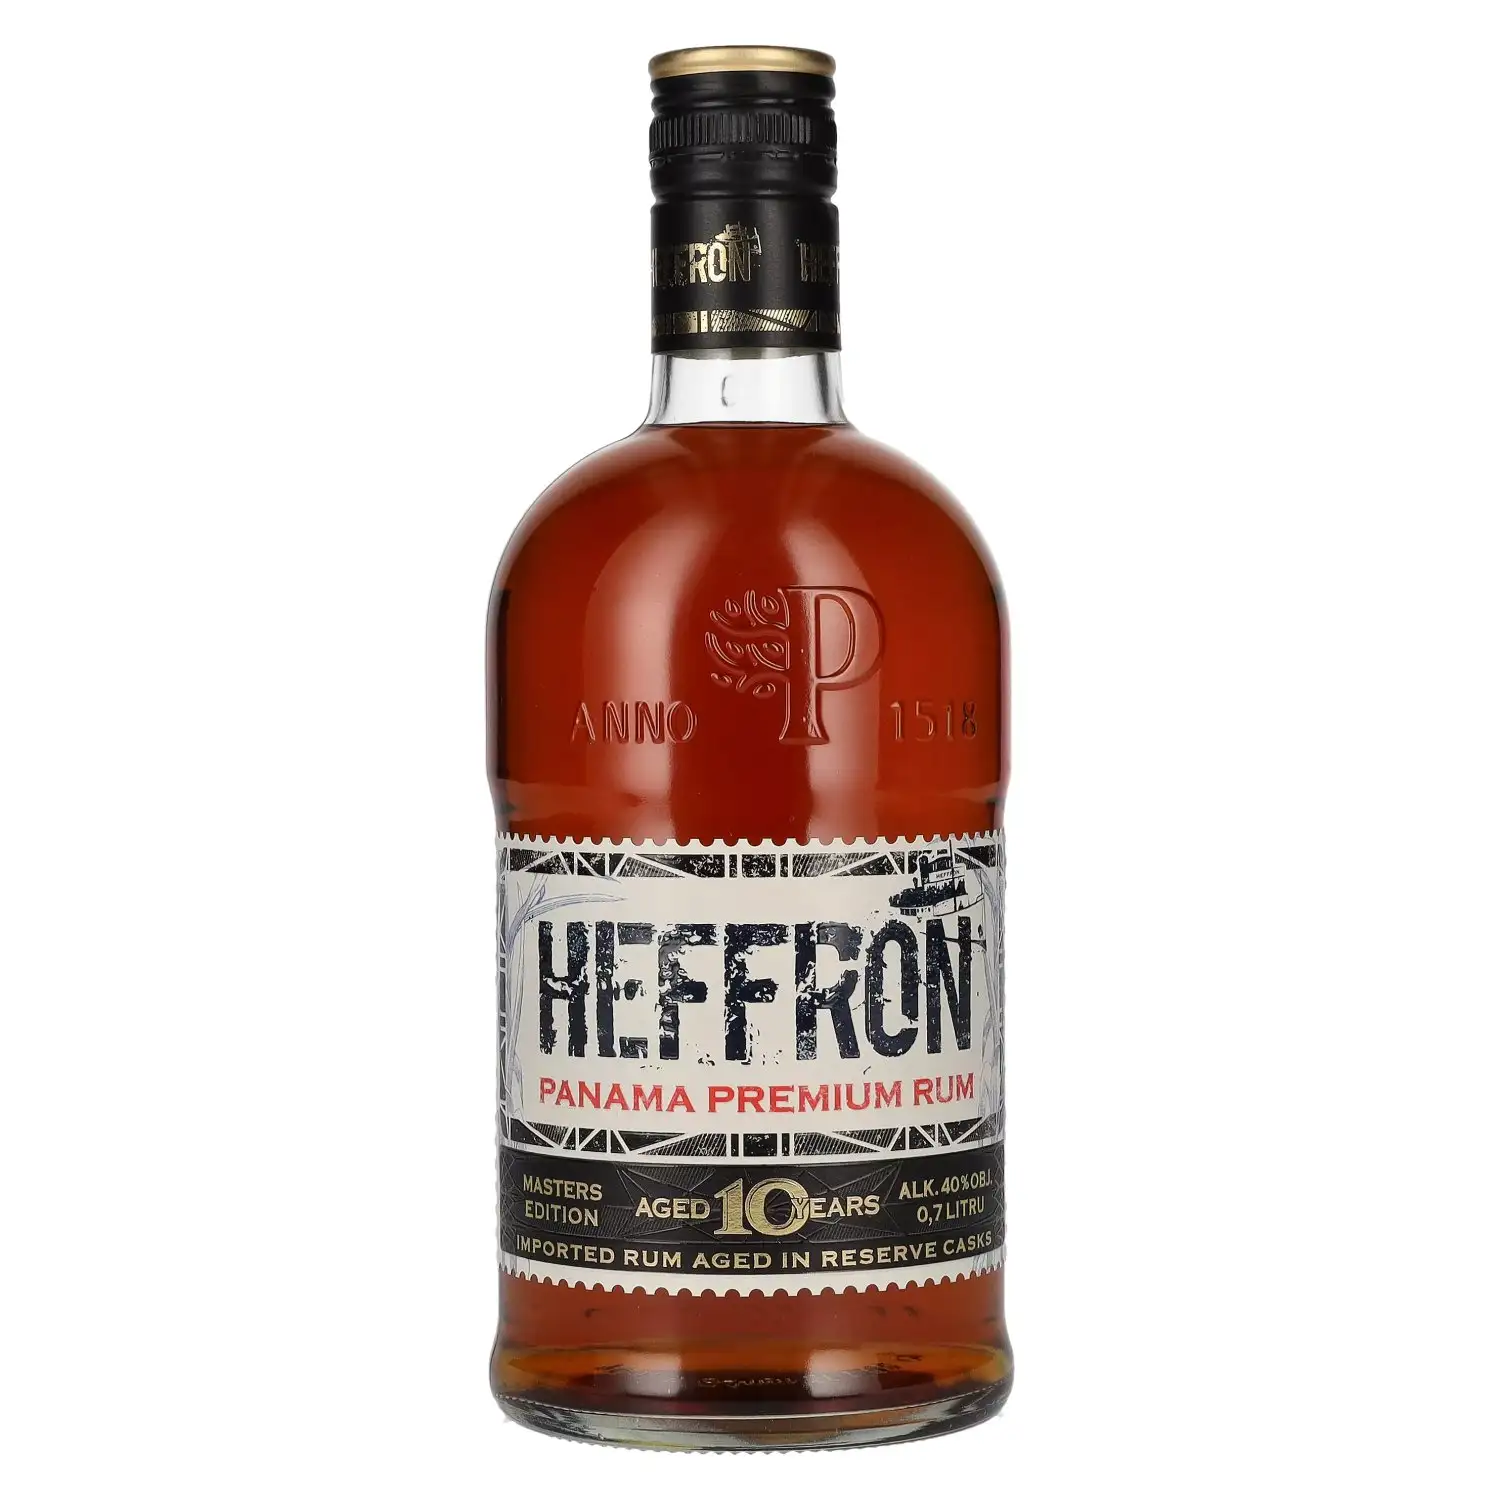 Image of the front of the bottle of the rum Heffron Panama Premium Rum 10YO